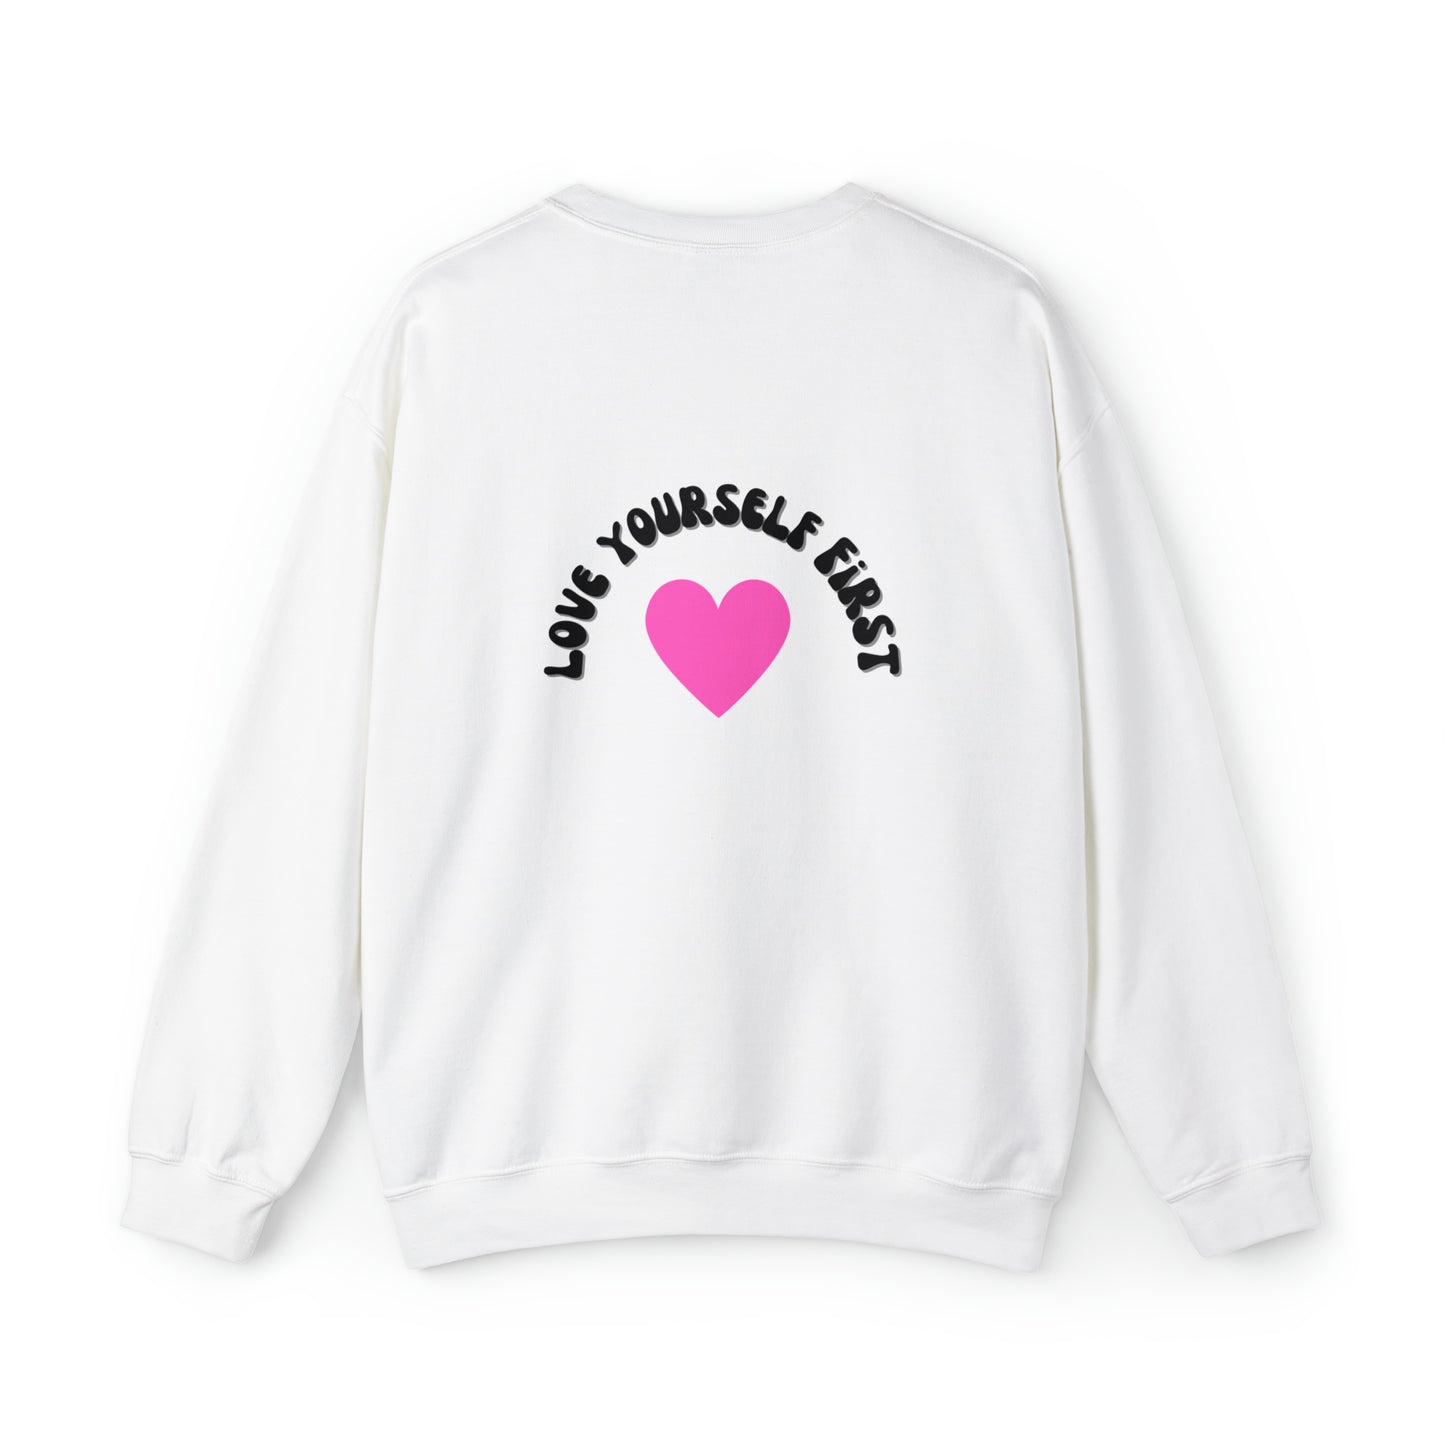 Love Yourself First sweatshirts